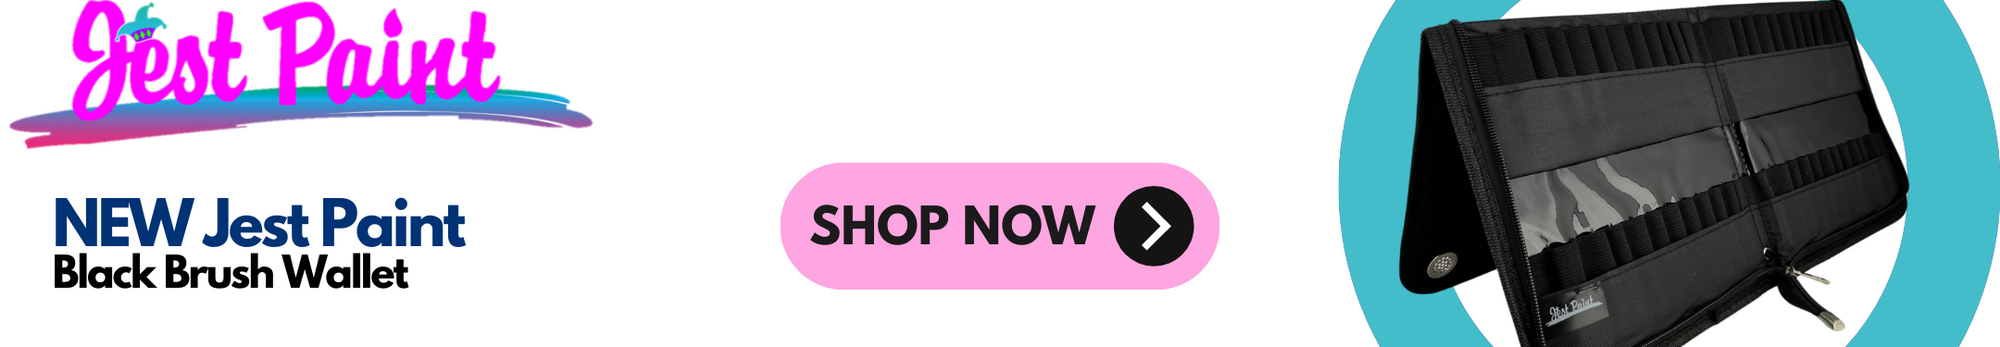 New Jest Paint Black Brush Wallet - Click to shop online